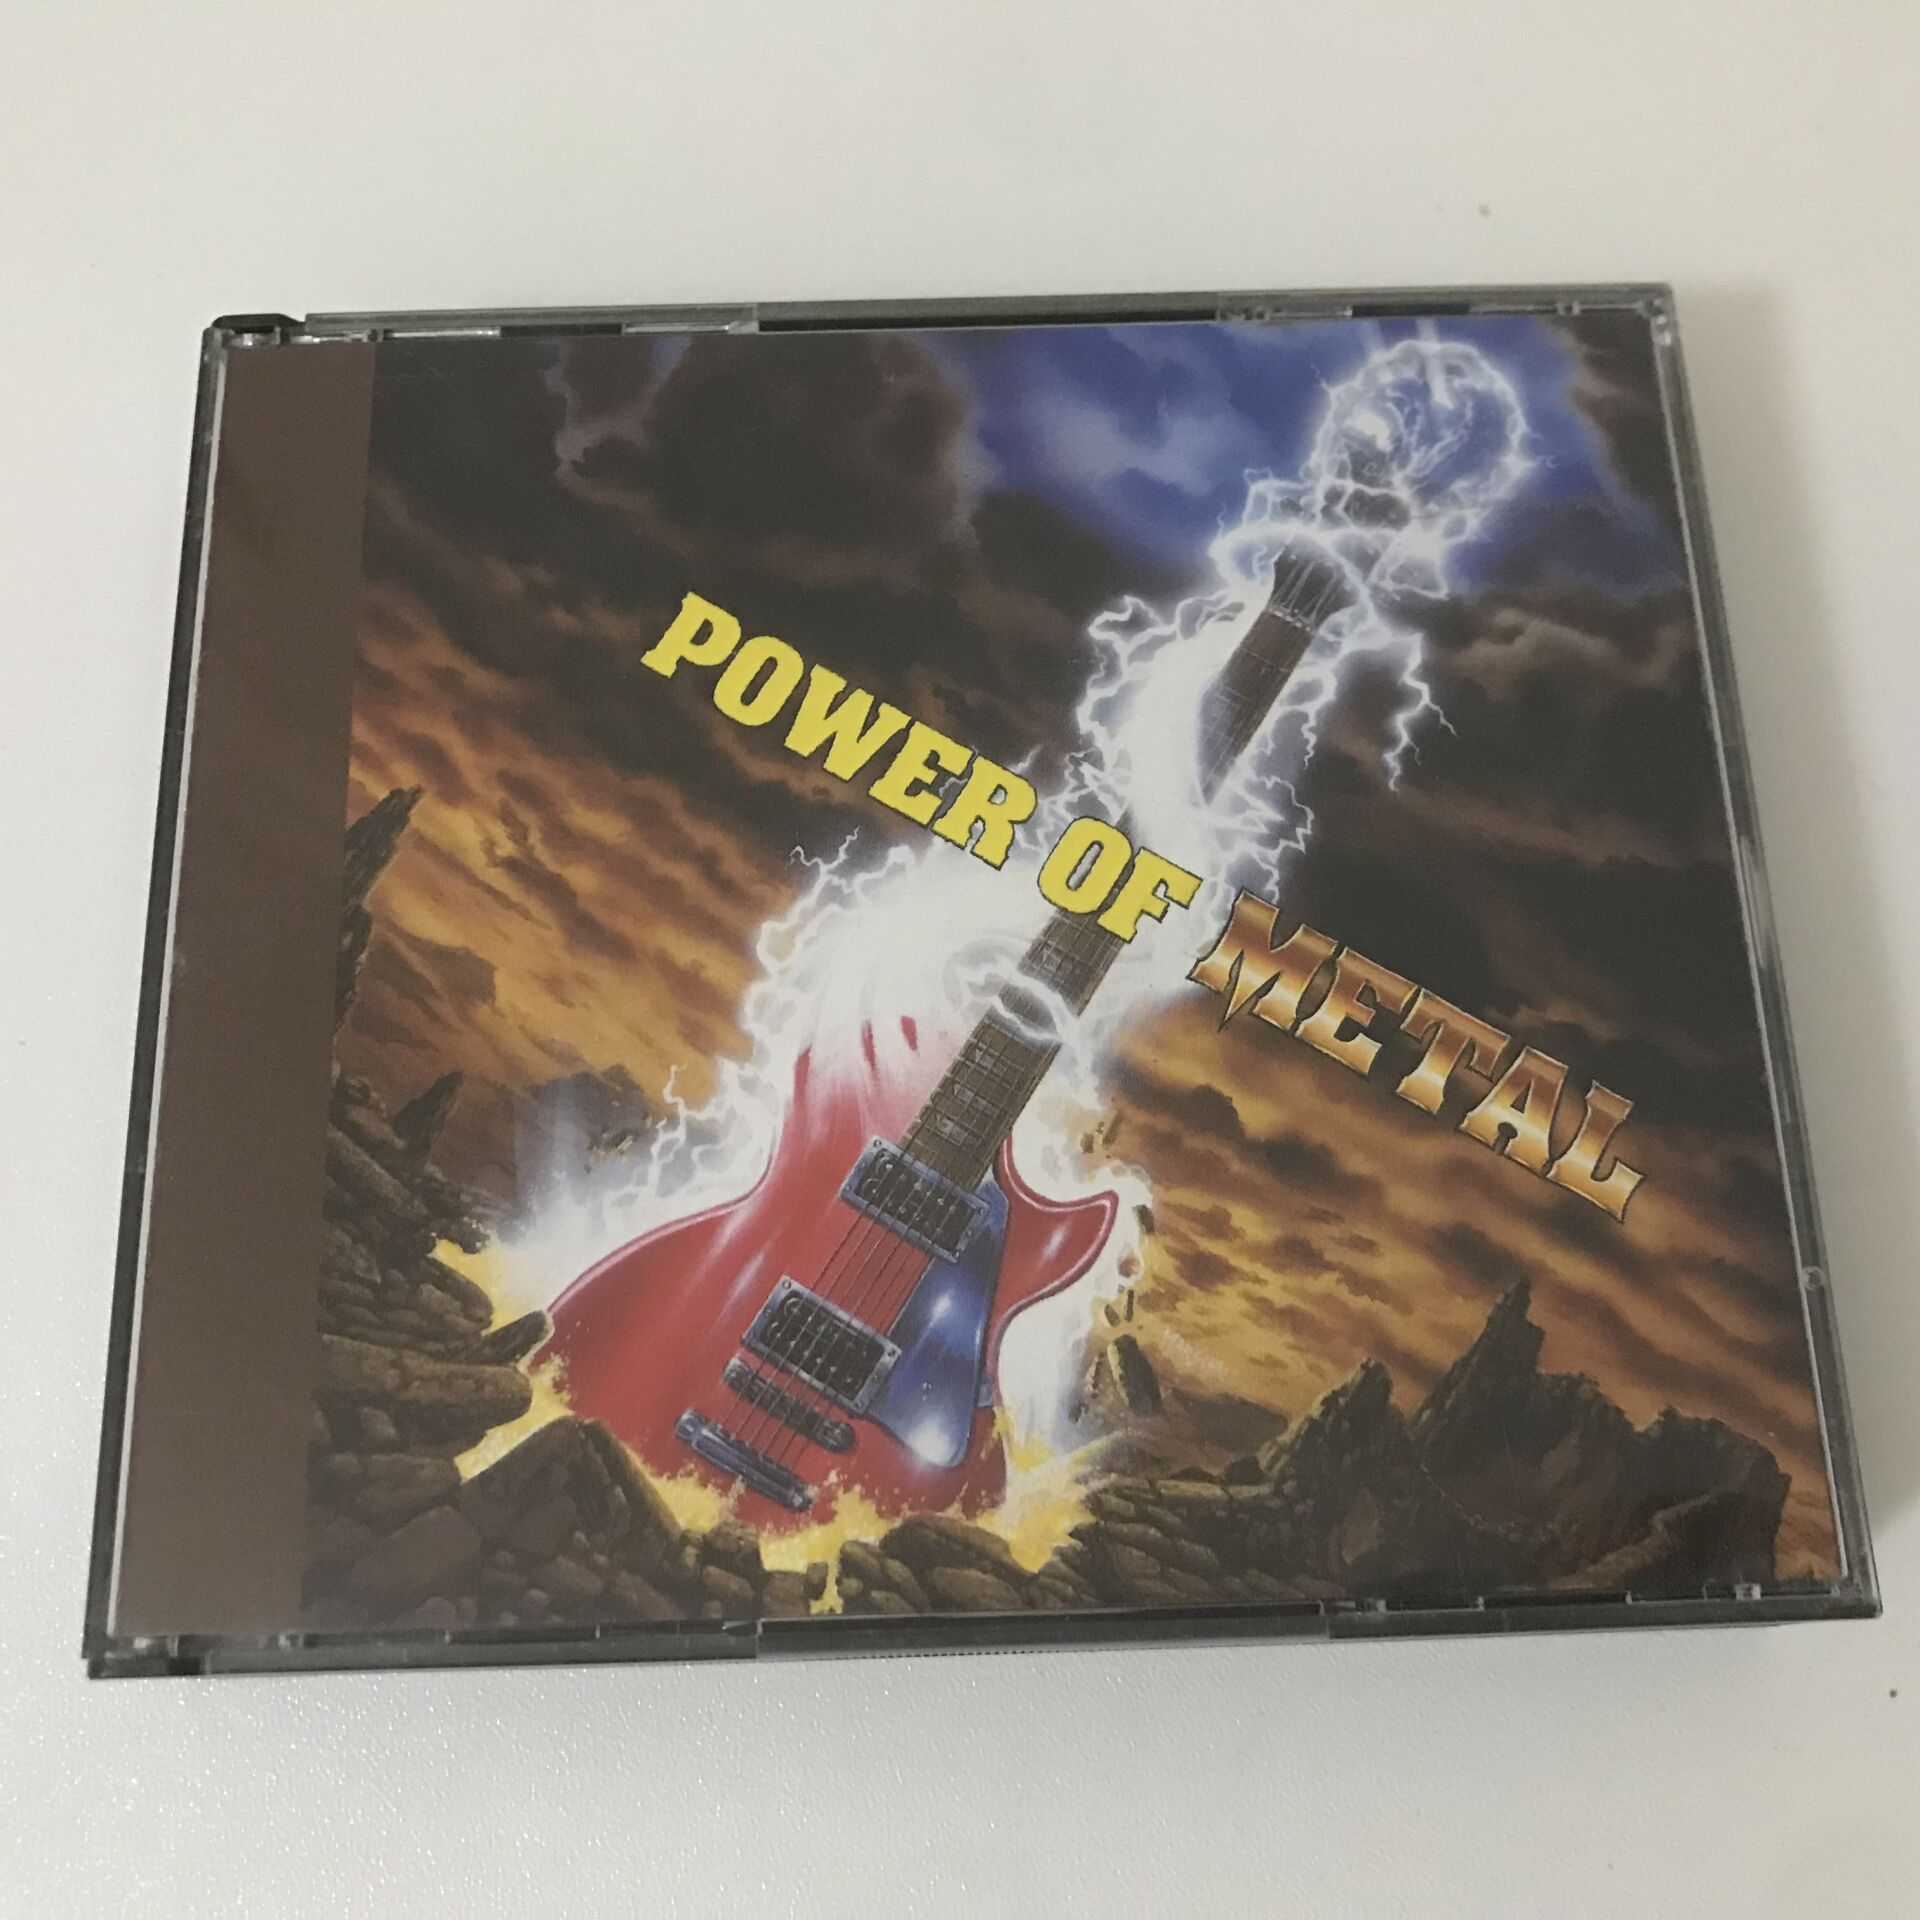 Power Of Metal 2 CD